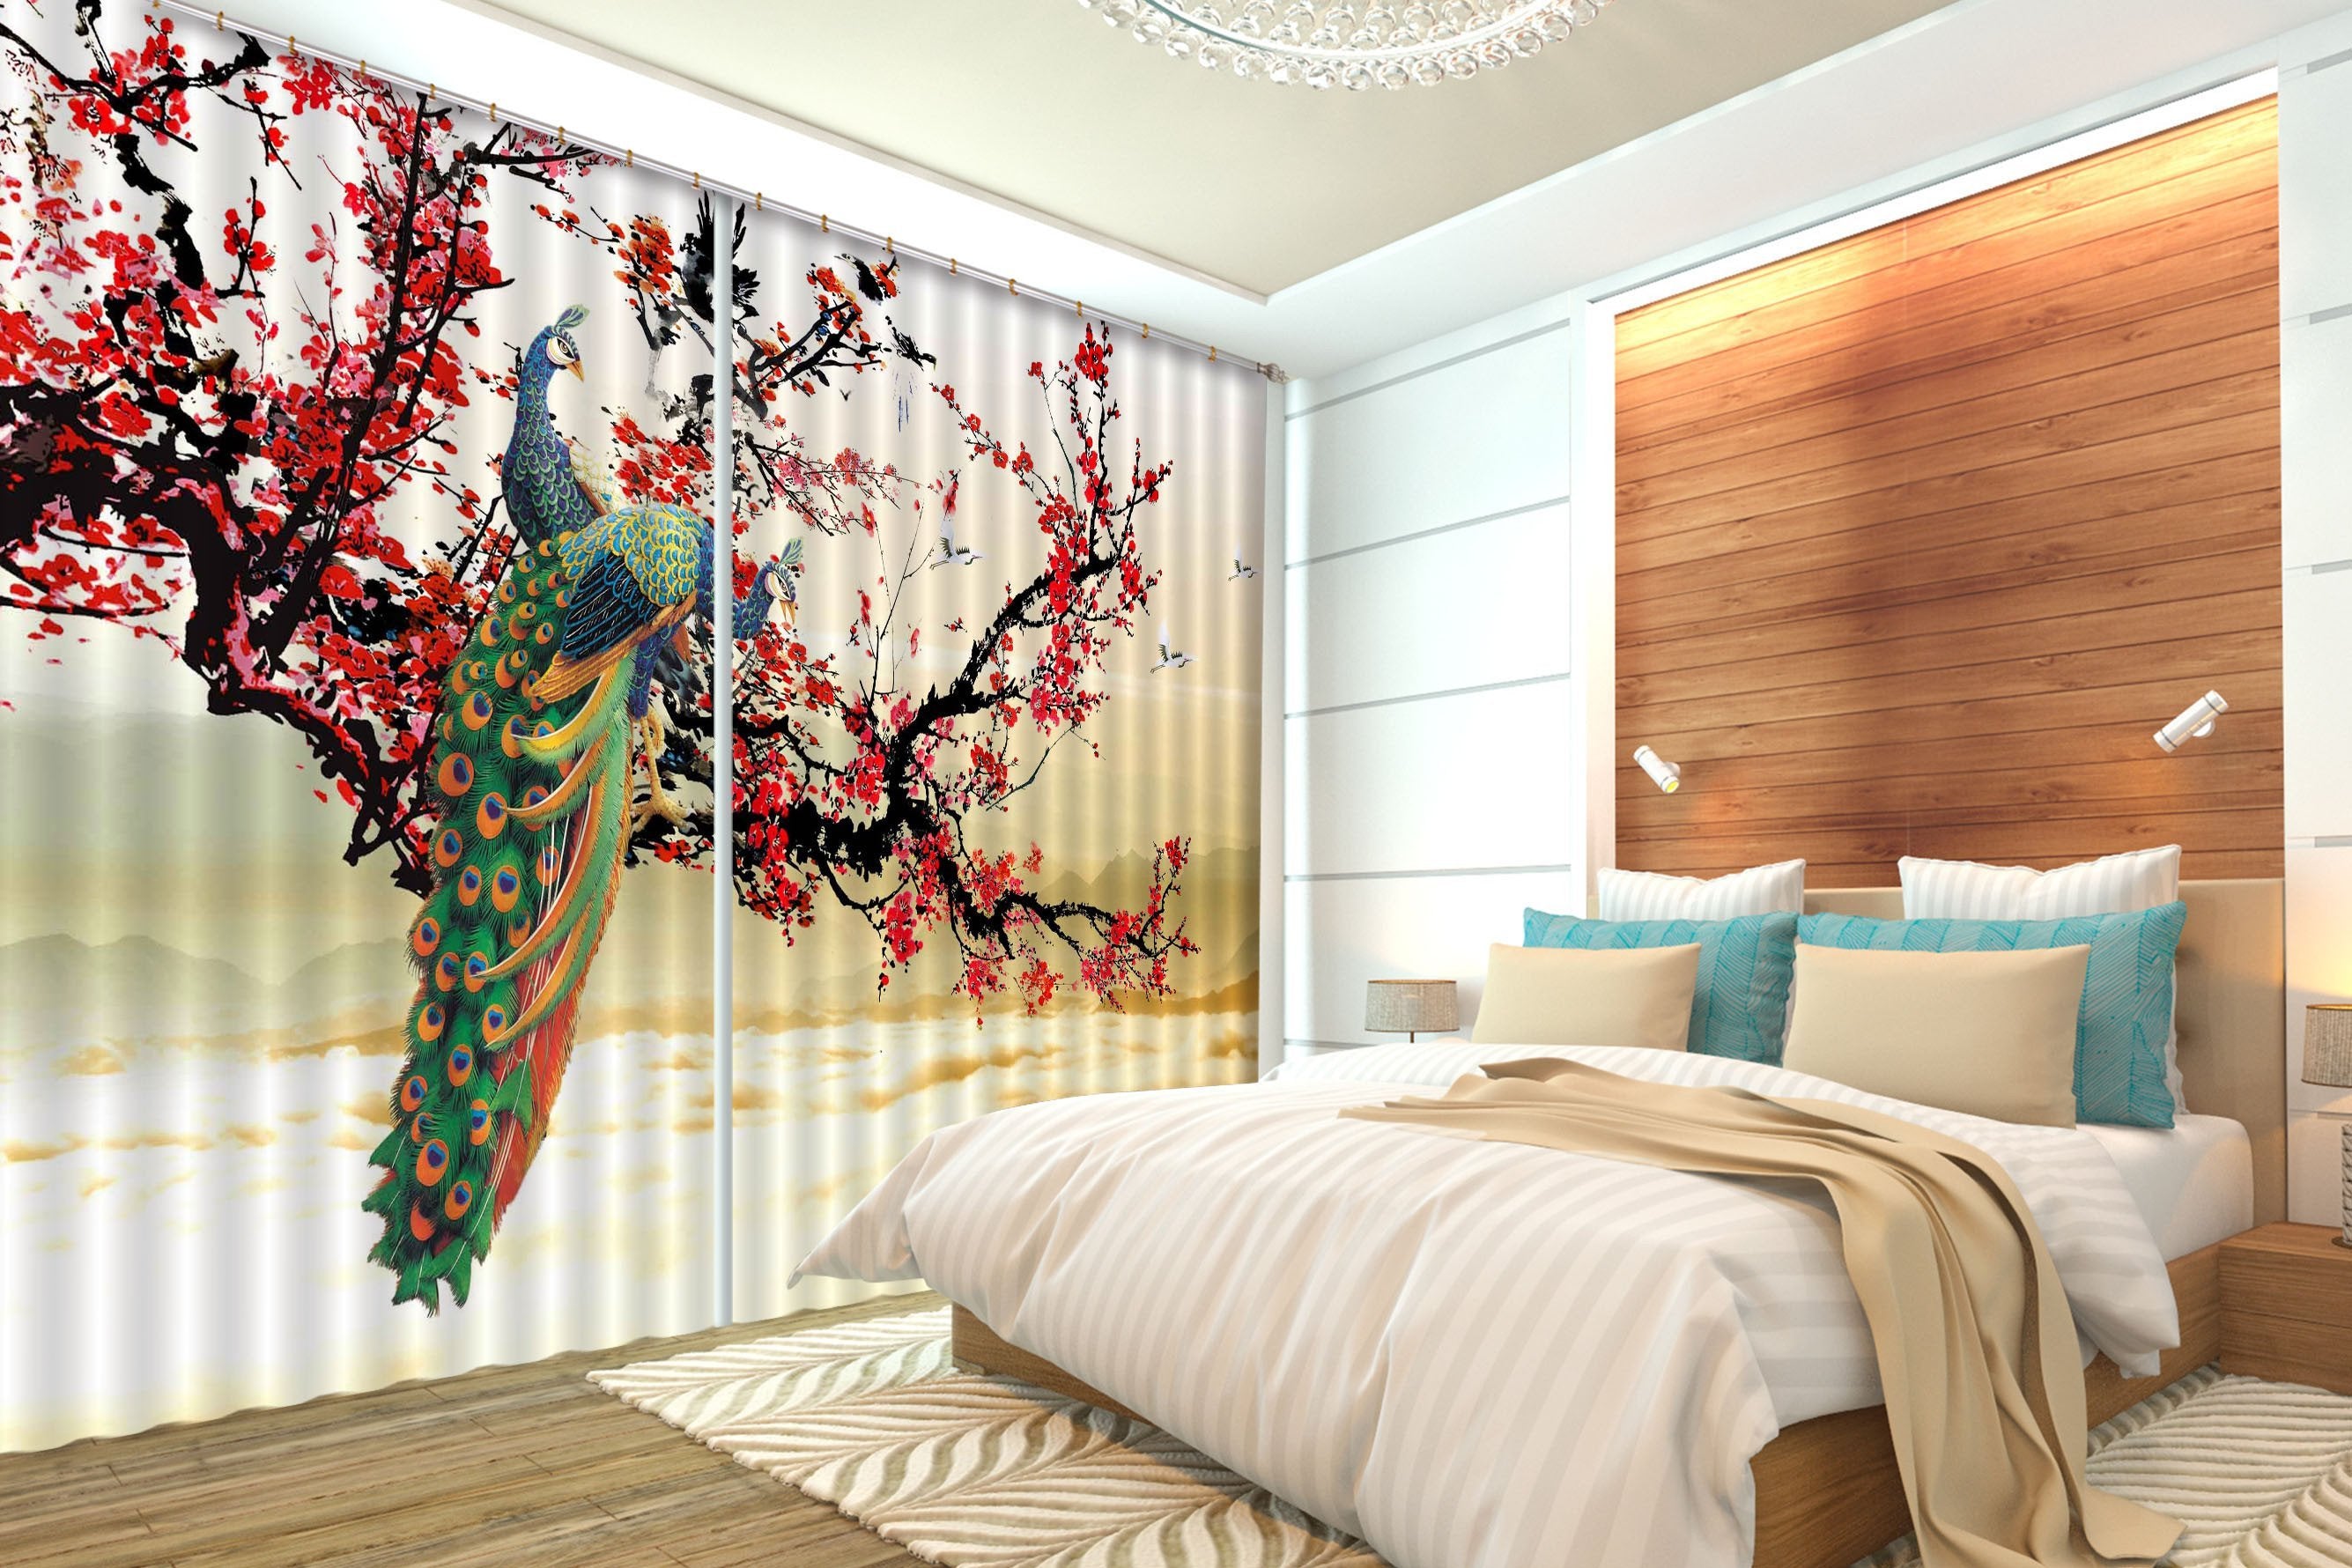 3D Plum Flowers Peacocks 142 Curtains Drapes Wallpaper AJ Wallpaper 